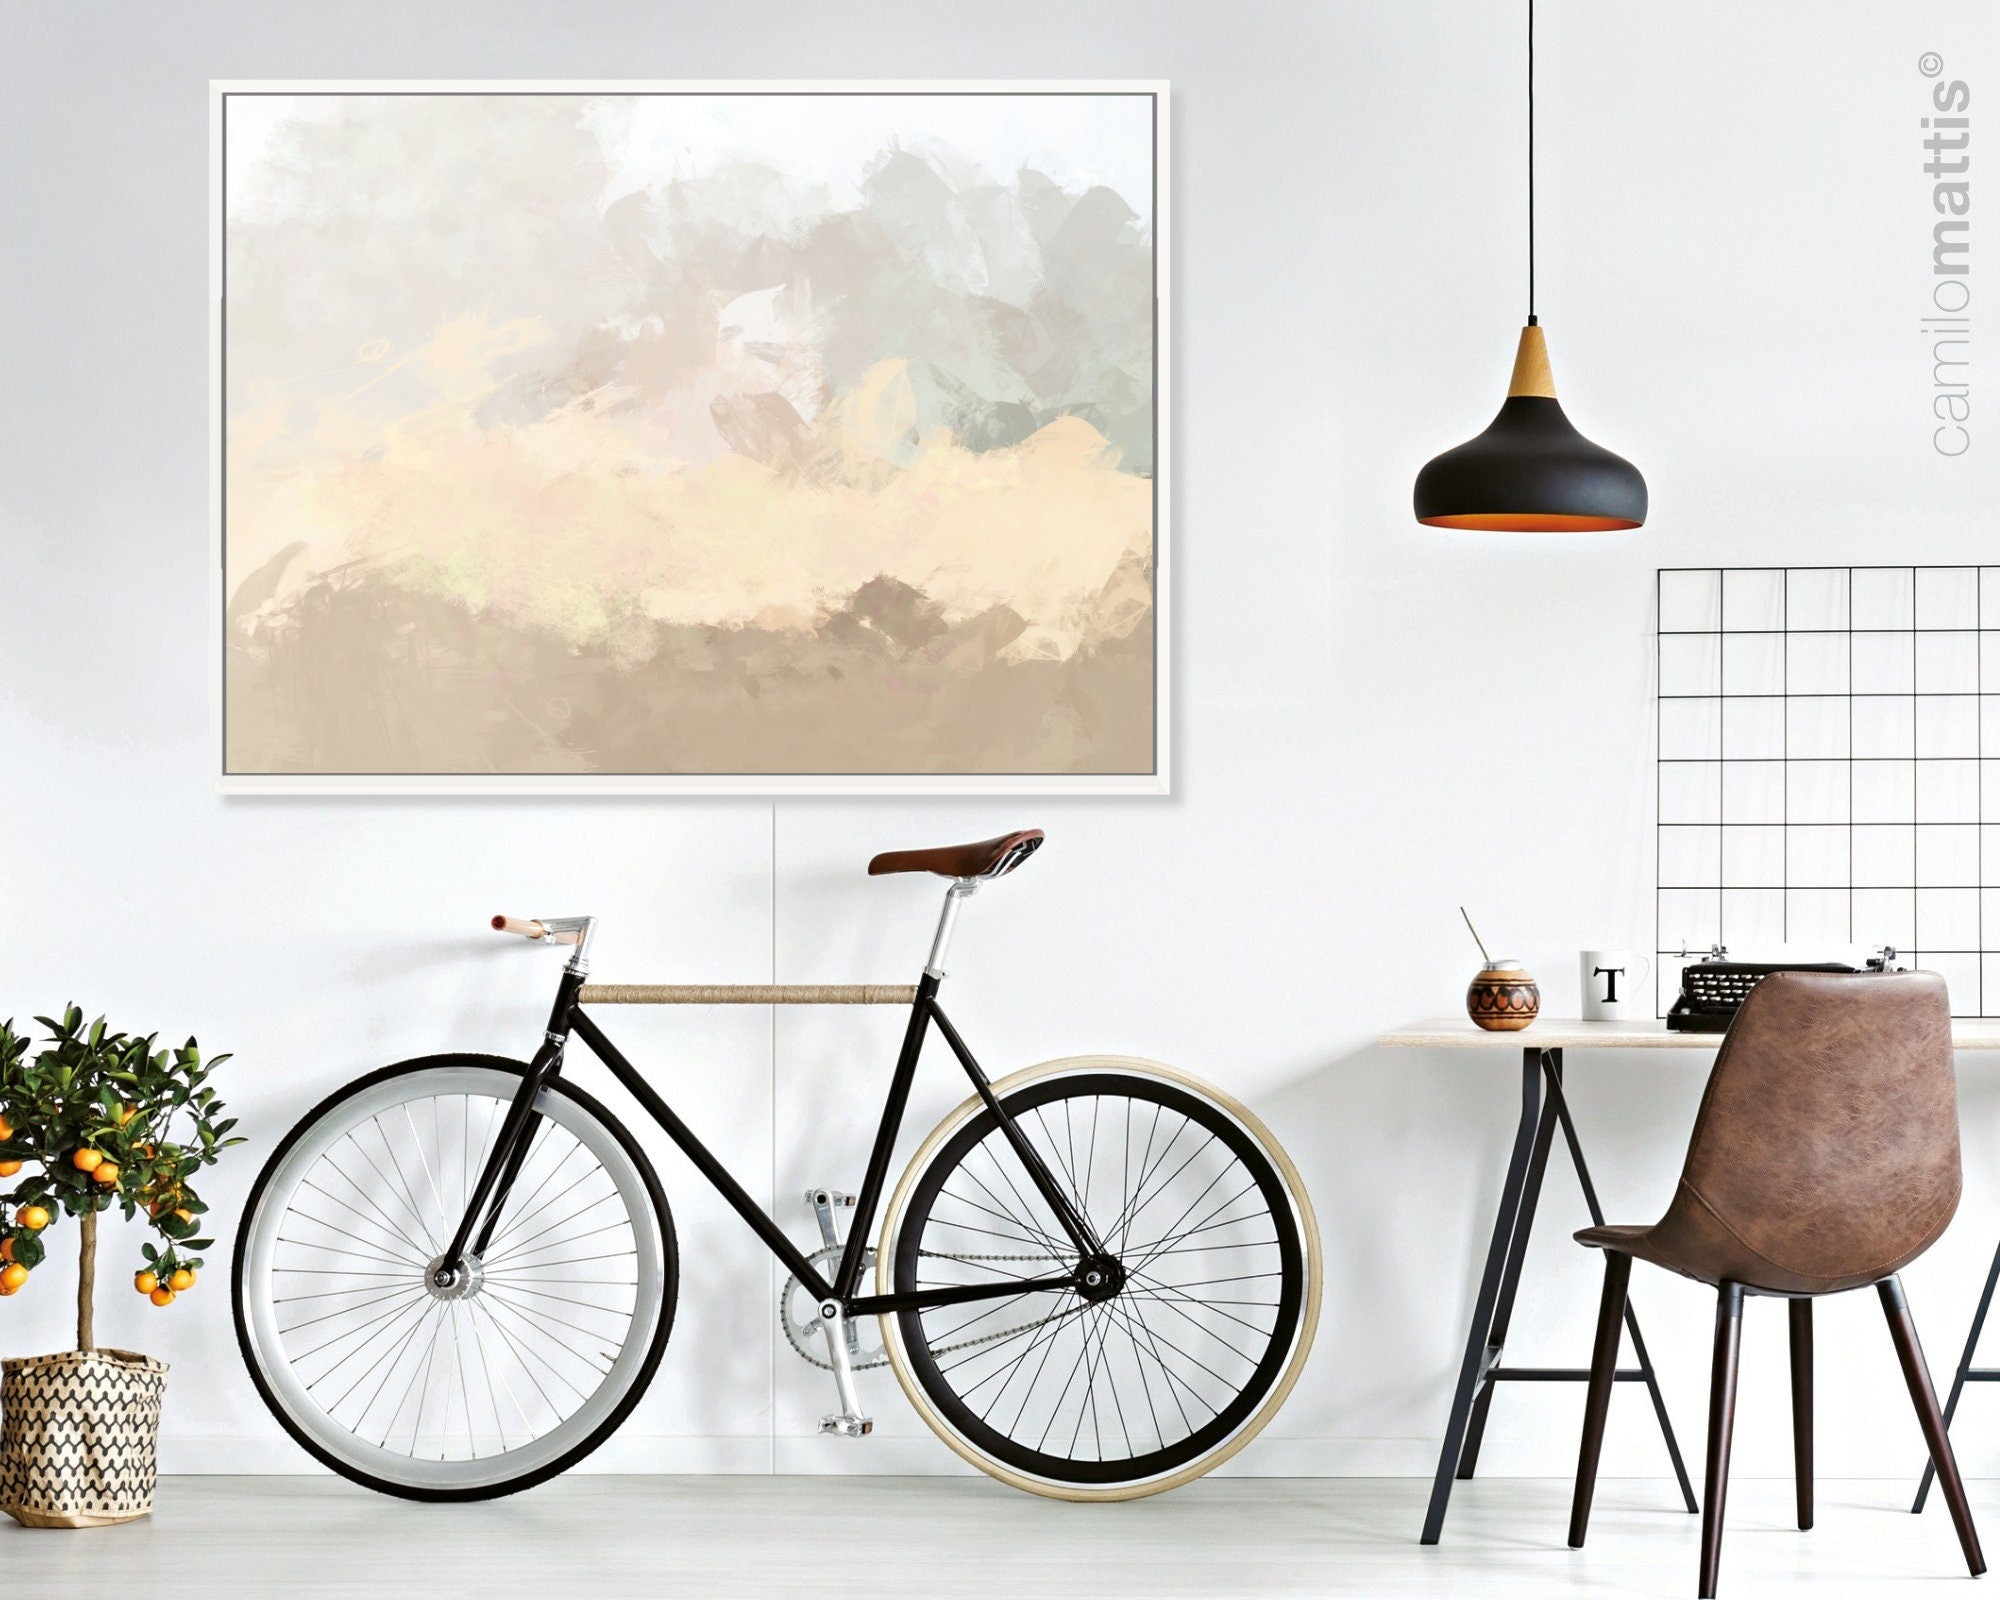 Beige and cream minimalist wall art print,  living room painting print